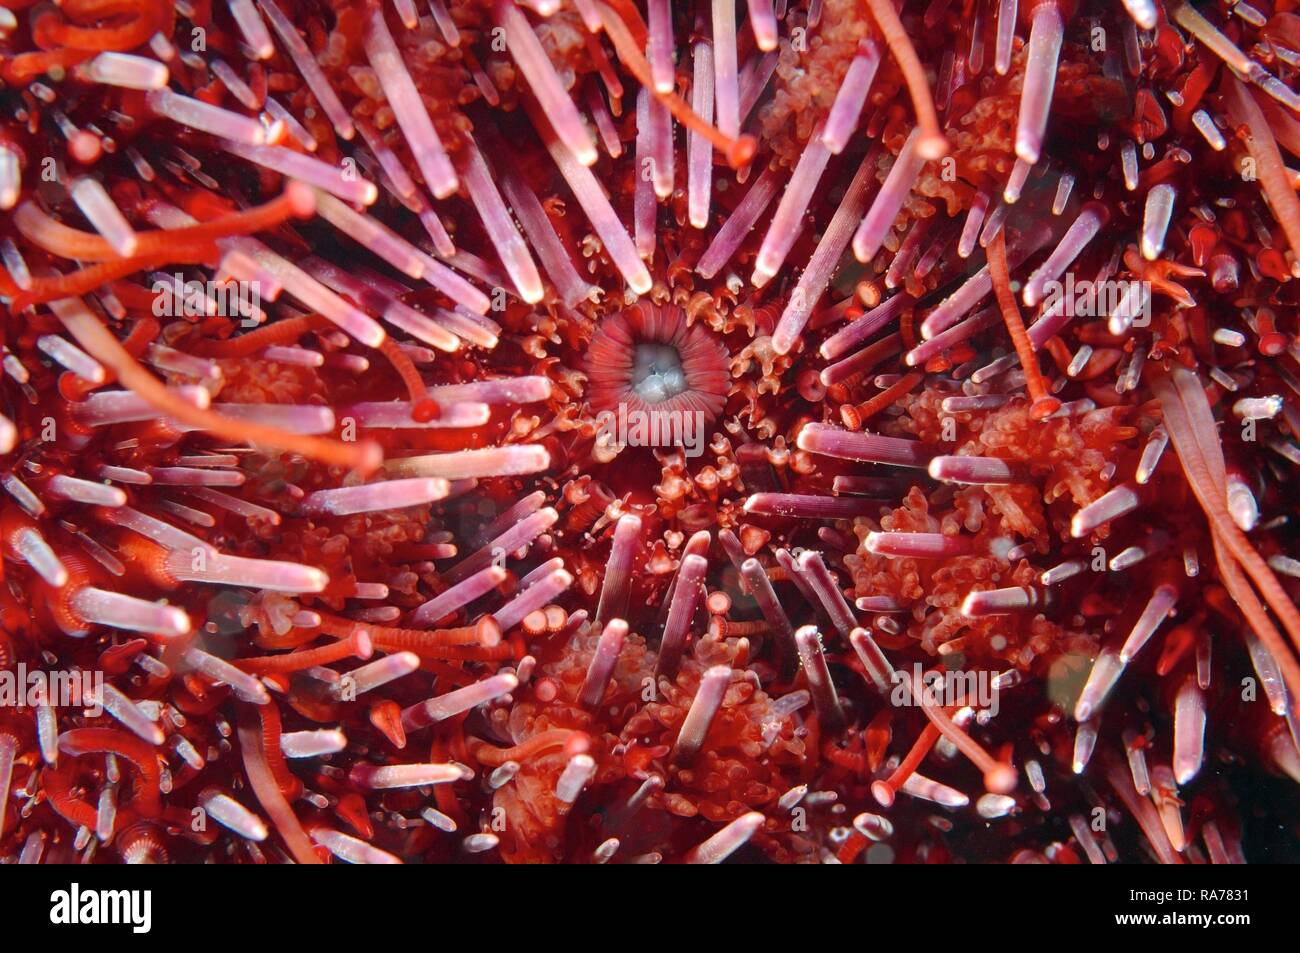 Mouth of Green sea urchin (Strongylocentrotus droebachiensis), Japan Sea, Primorsky Krai, Russian Federation, Far East Stock Photo